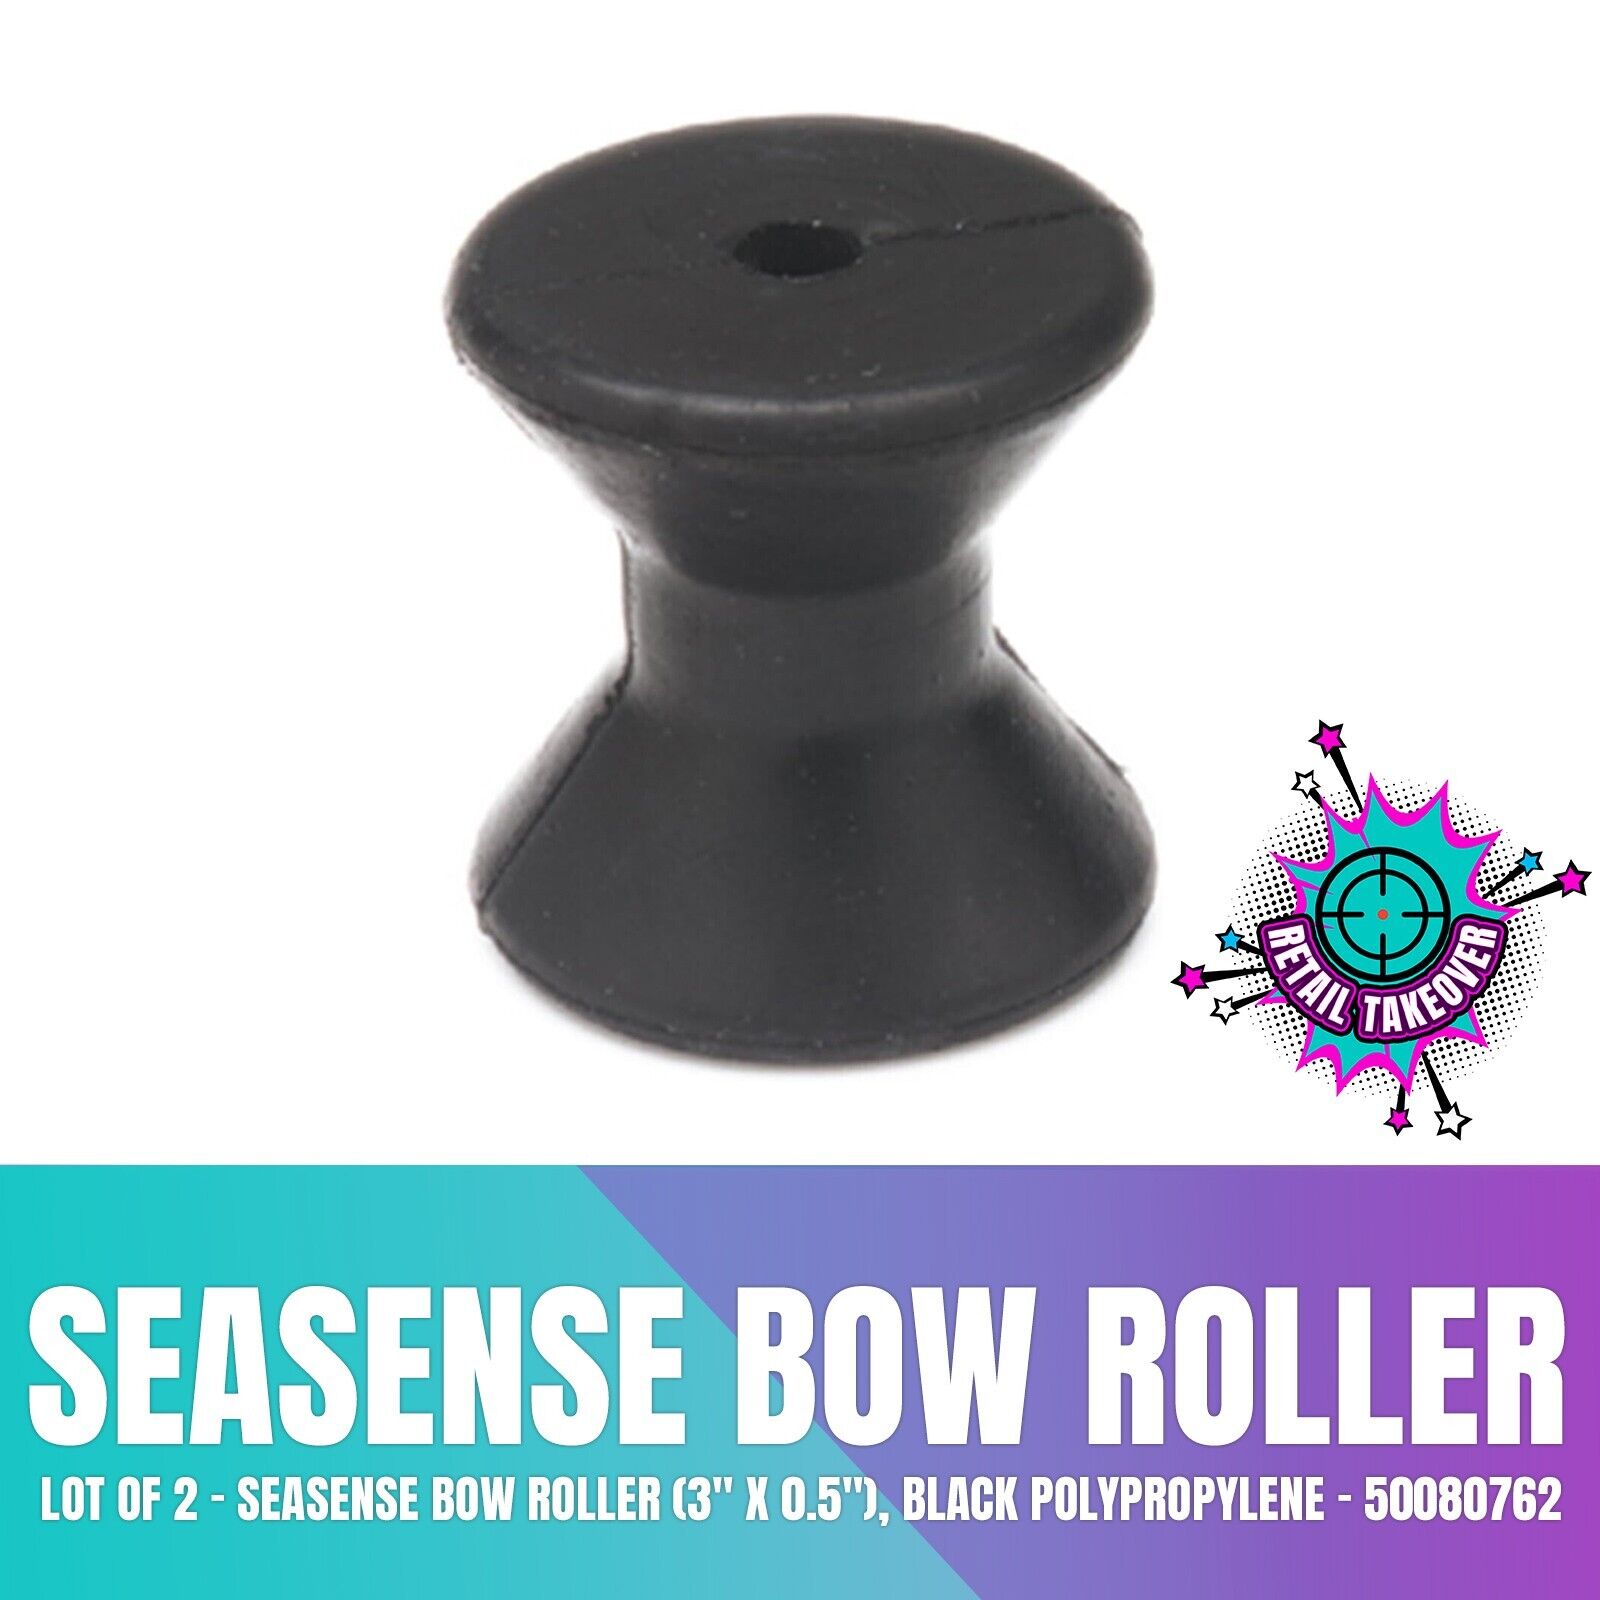 Lot of 2 - SeaSense Bow Roller (3" x 0.5"), Black Polypropylene - 50080762